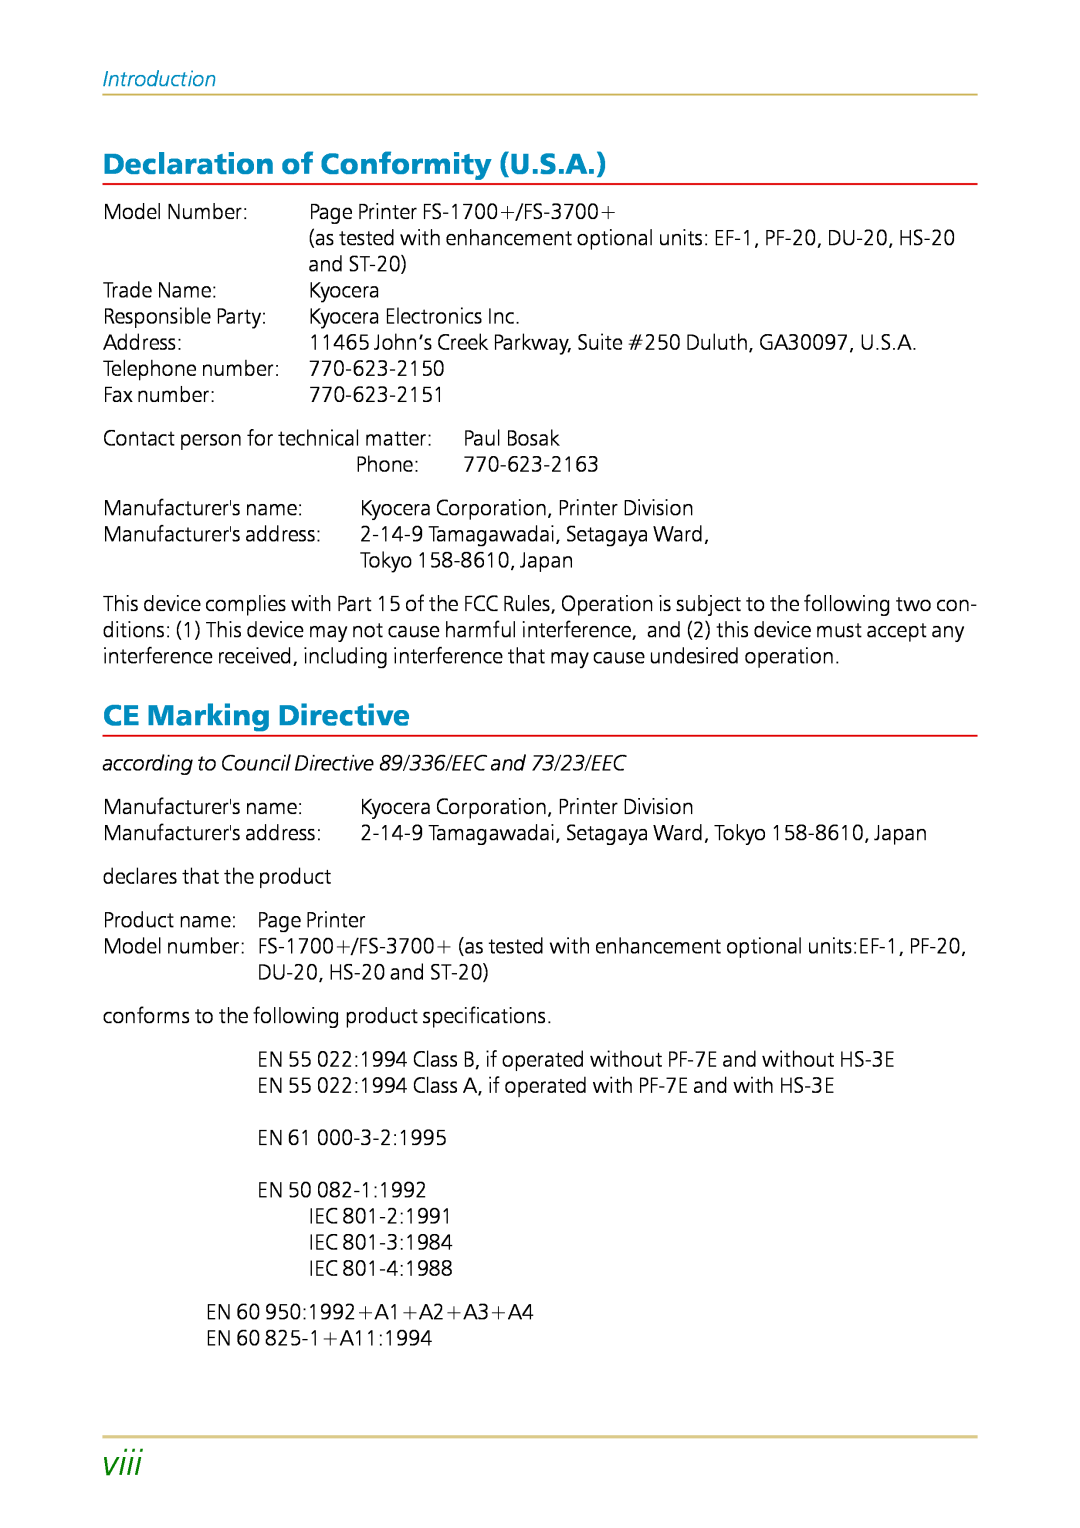 Kyocera FS-1700 user manual viii, Declaration of Conformity U.S.A, CE Marking Directive, Introduction 